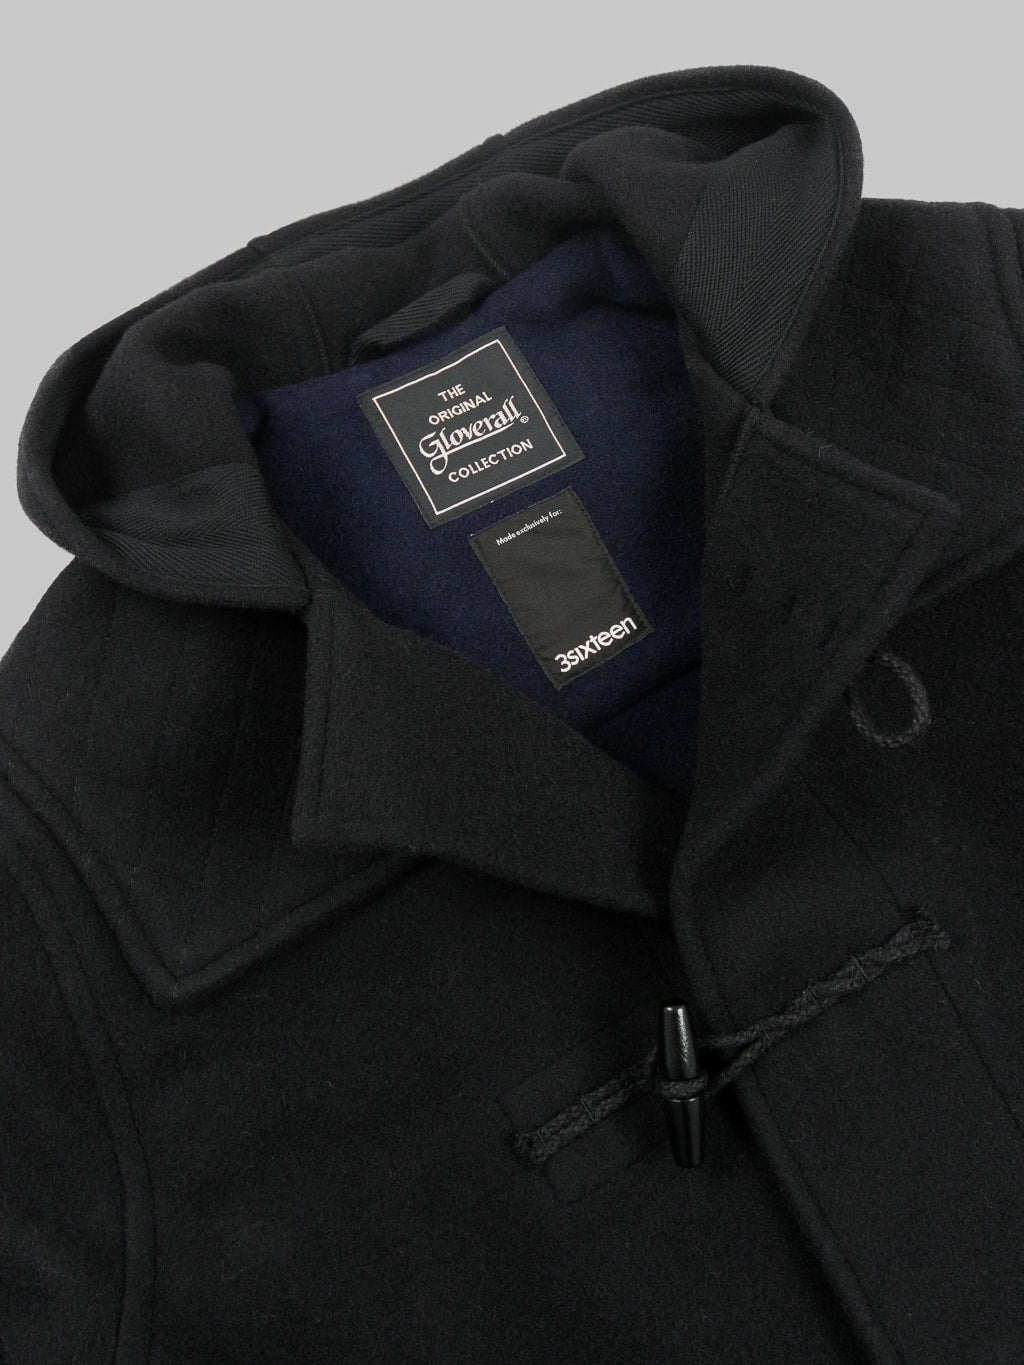 3sixteen x Gloverall Monty Duffle Coat black navy wool fabric collar